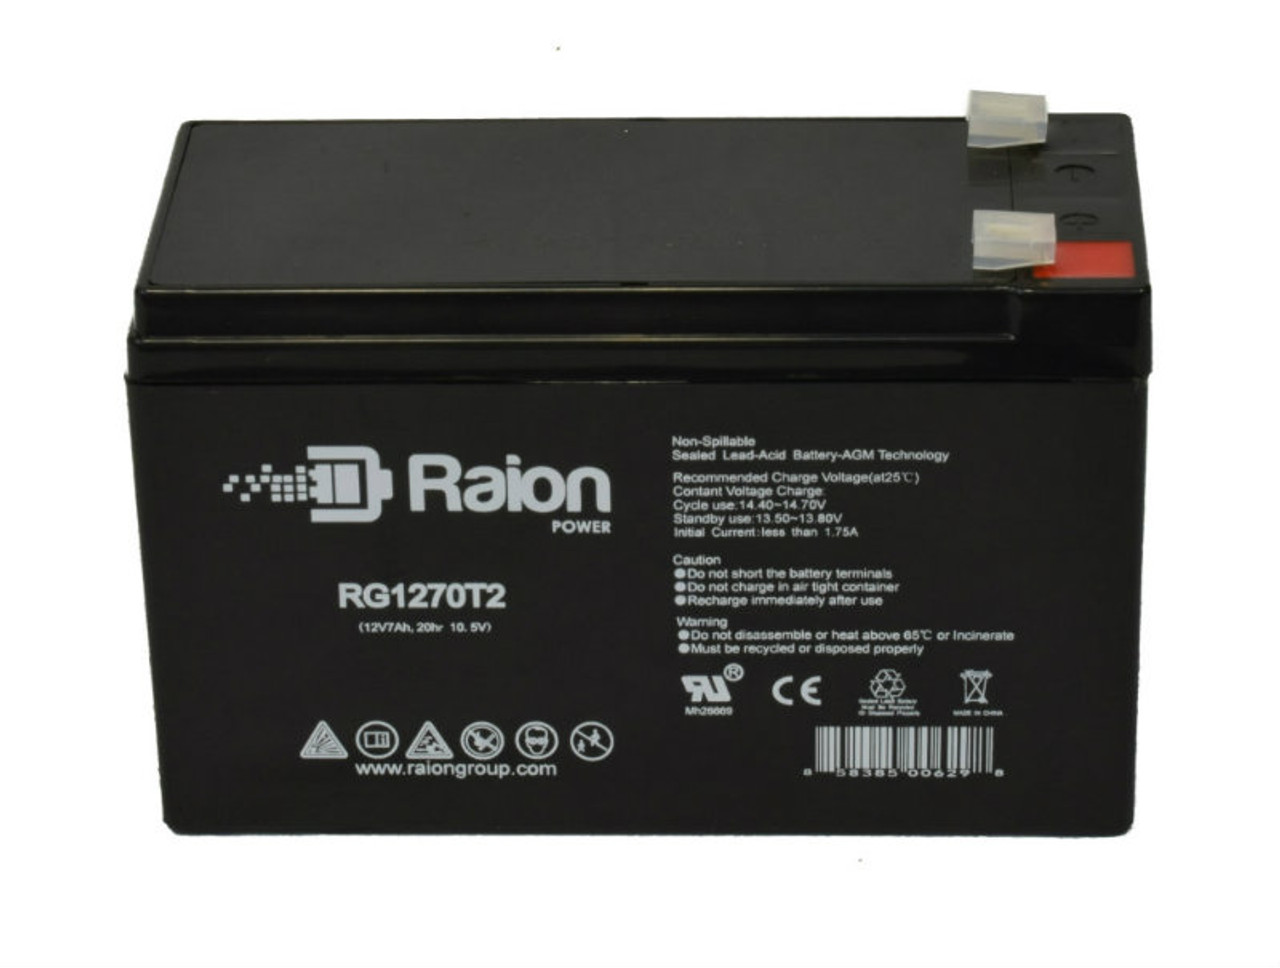 Raion Power RG1270T1 12V 7Ah Lead Acid Battery for Humminbird PiranhaMAX 150 Portable Fish Finder